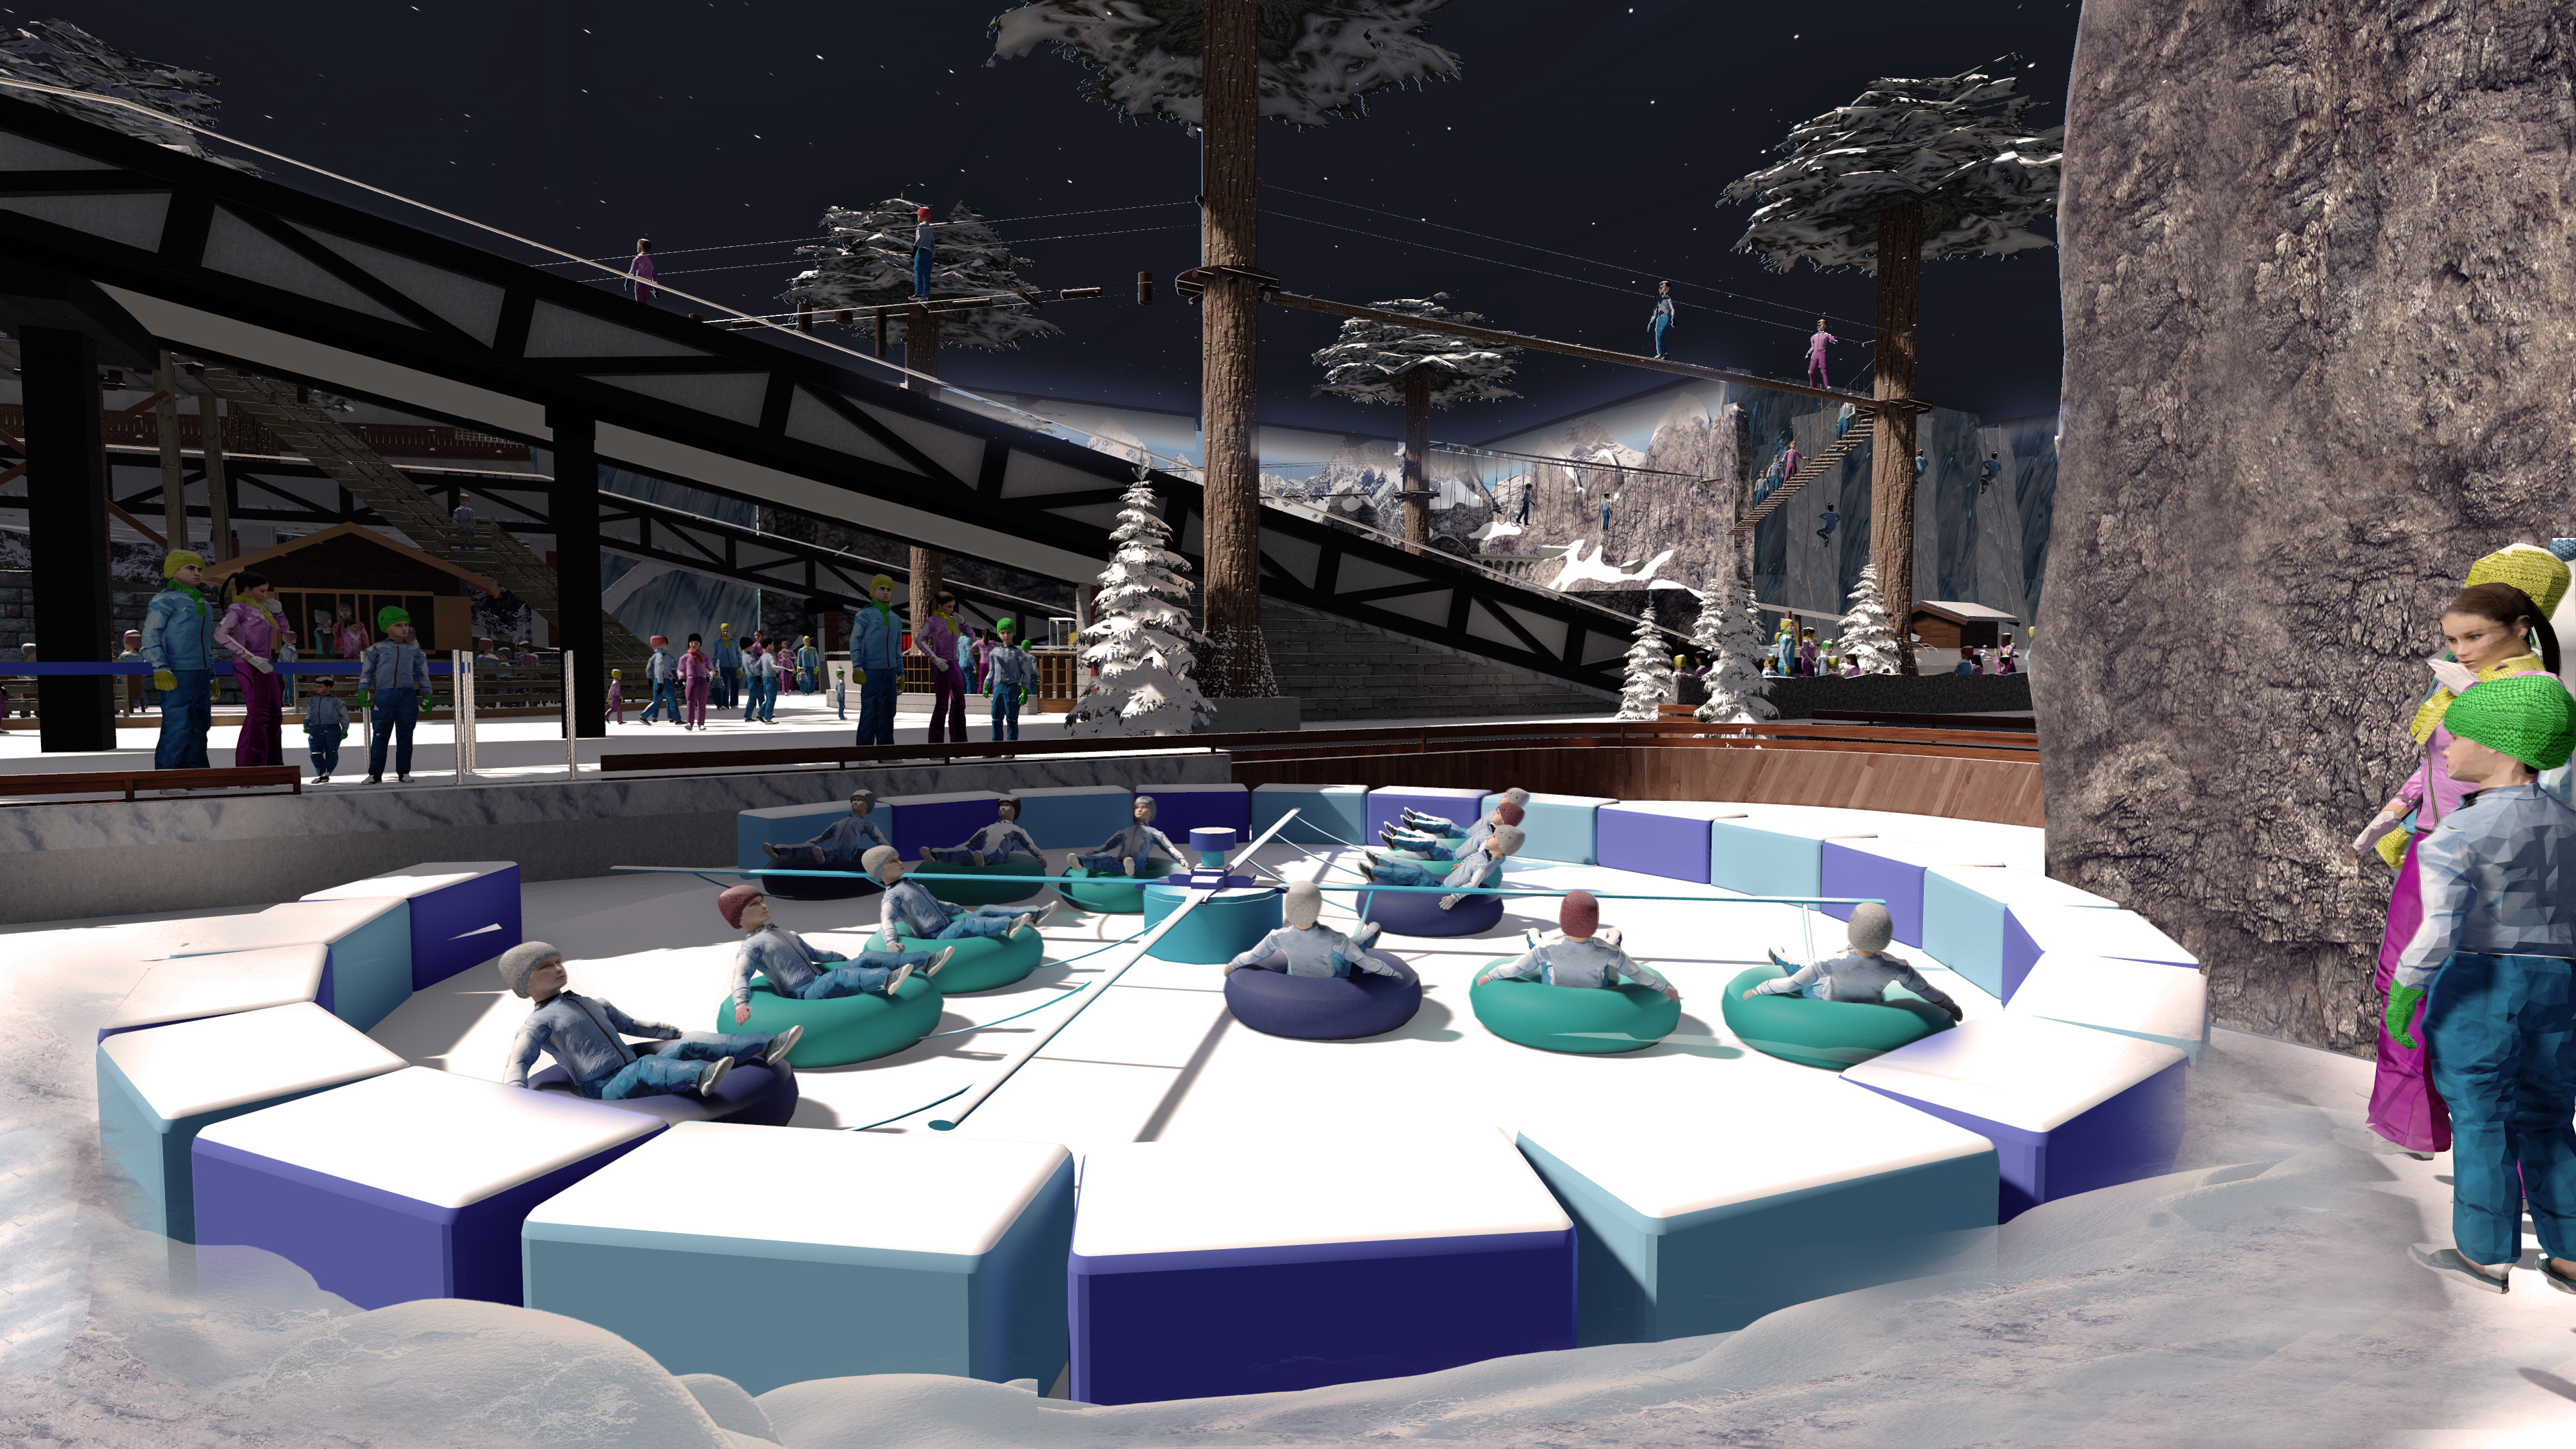 Indoor snow themepark - Snowplay Snow Caroussel